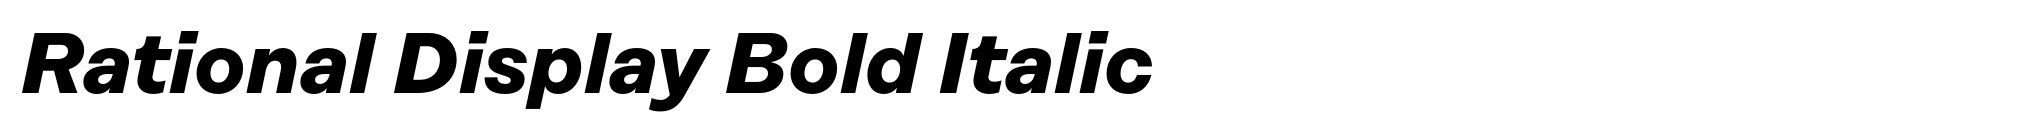 Rational Display Bold Italic image